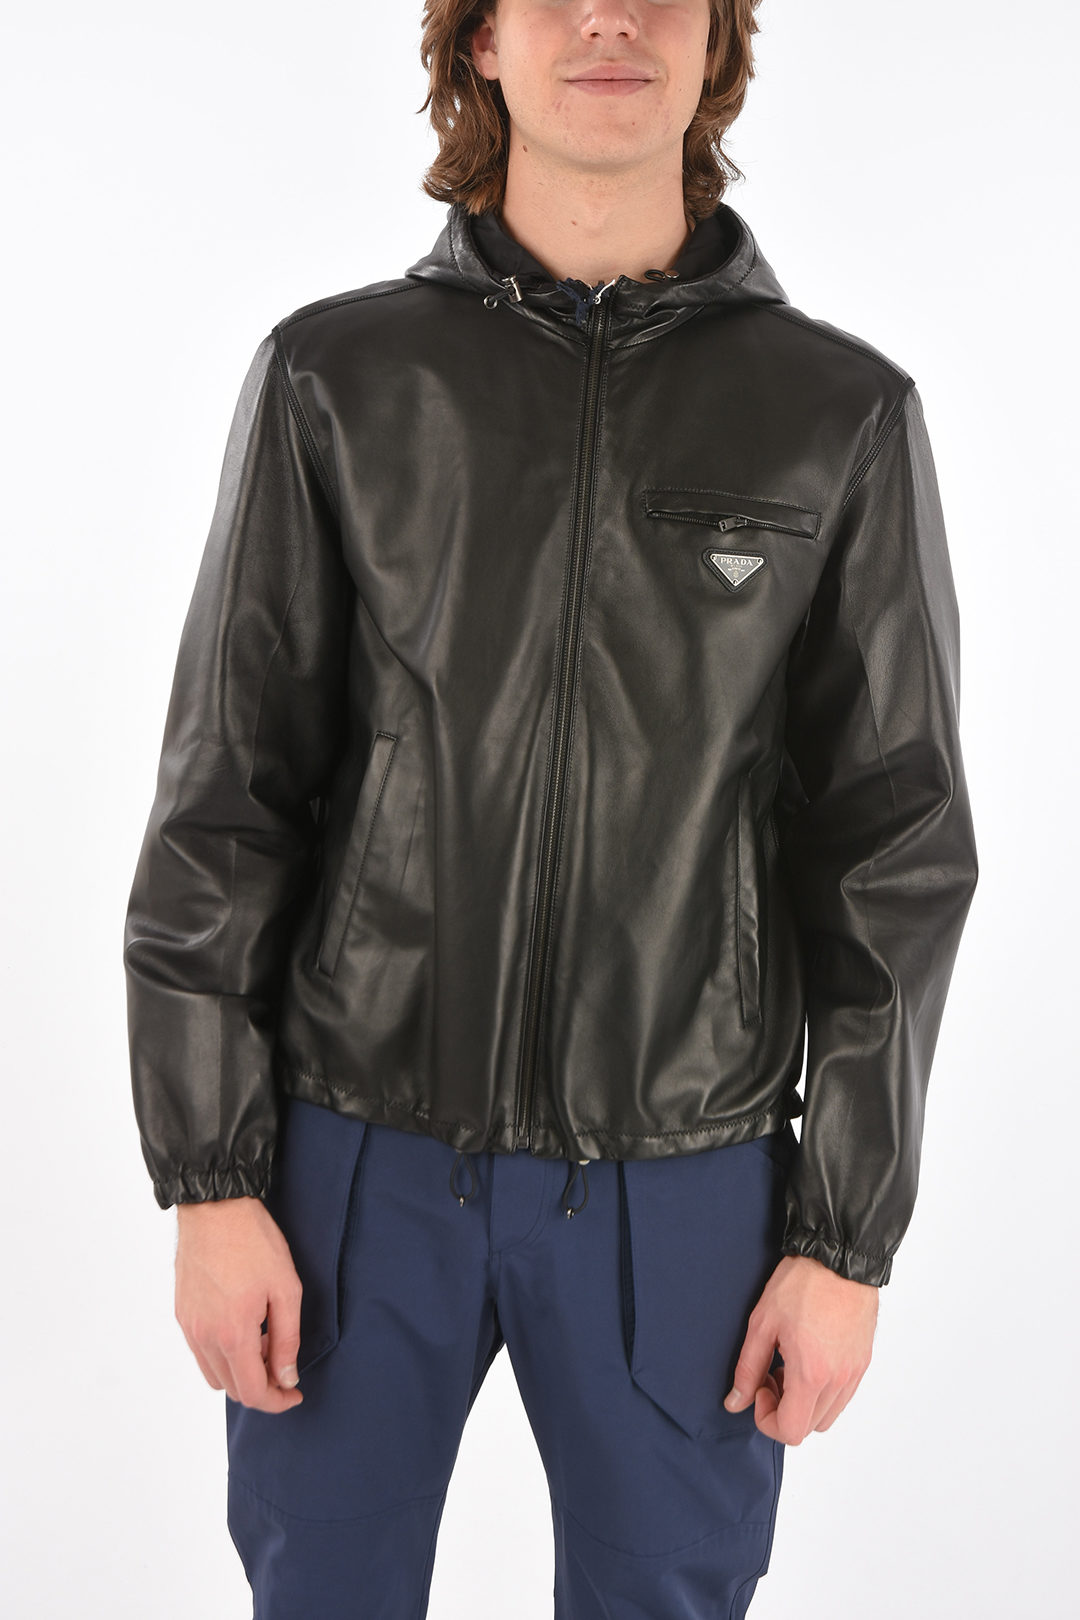 Prada Reversible Leather Jacket with Hood men - Glamood Outlet